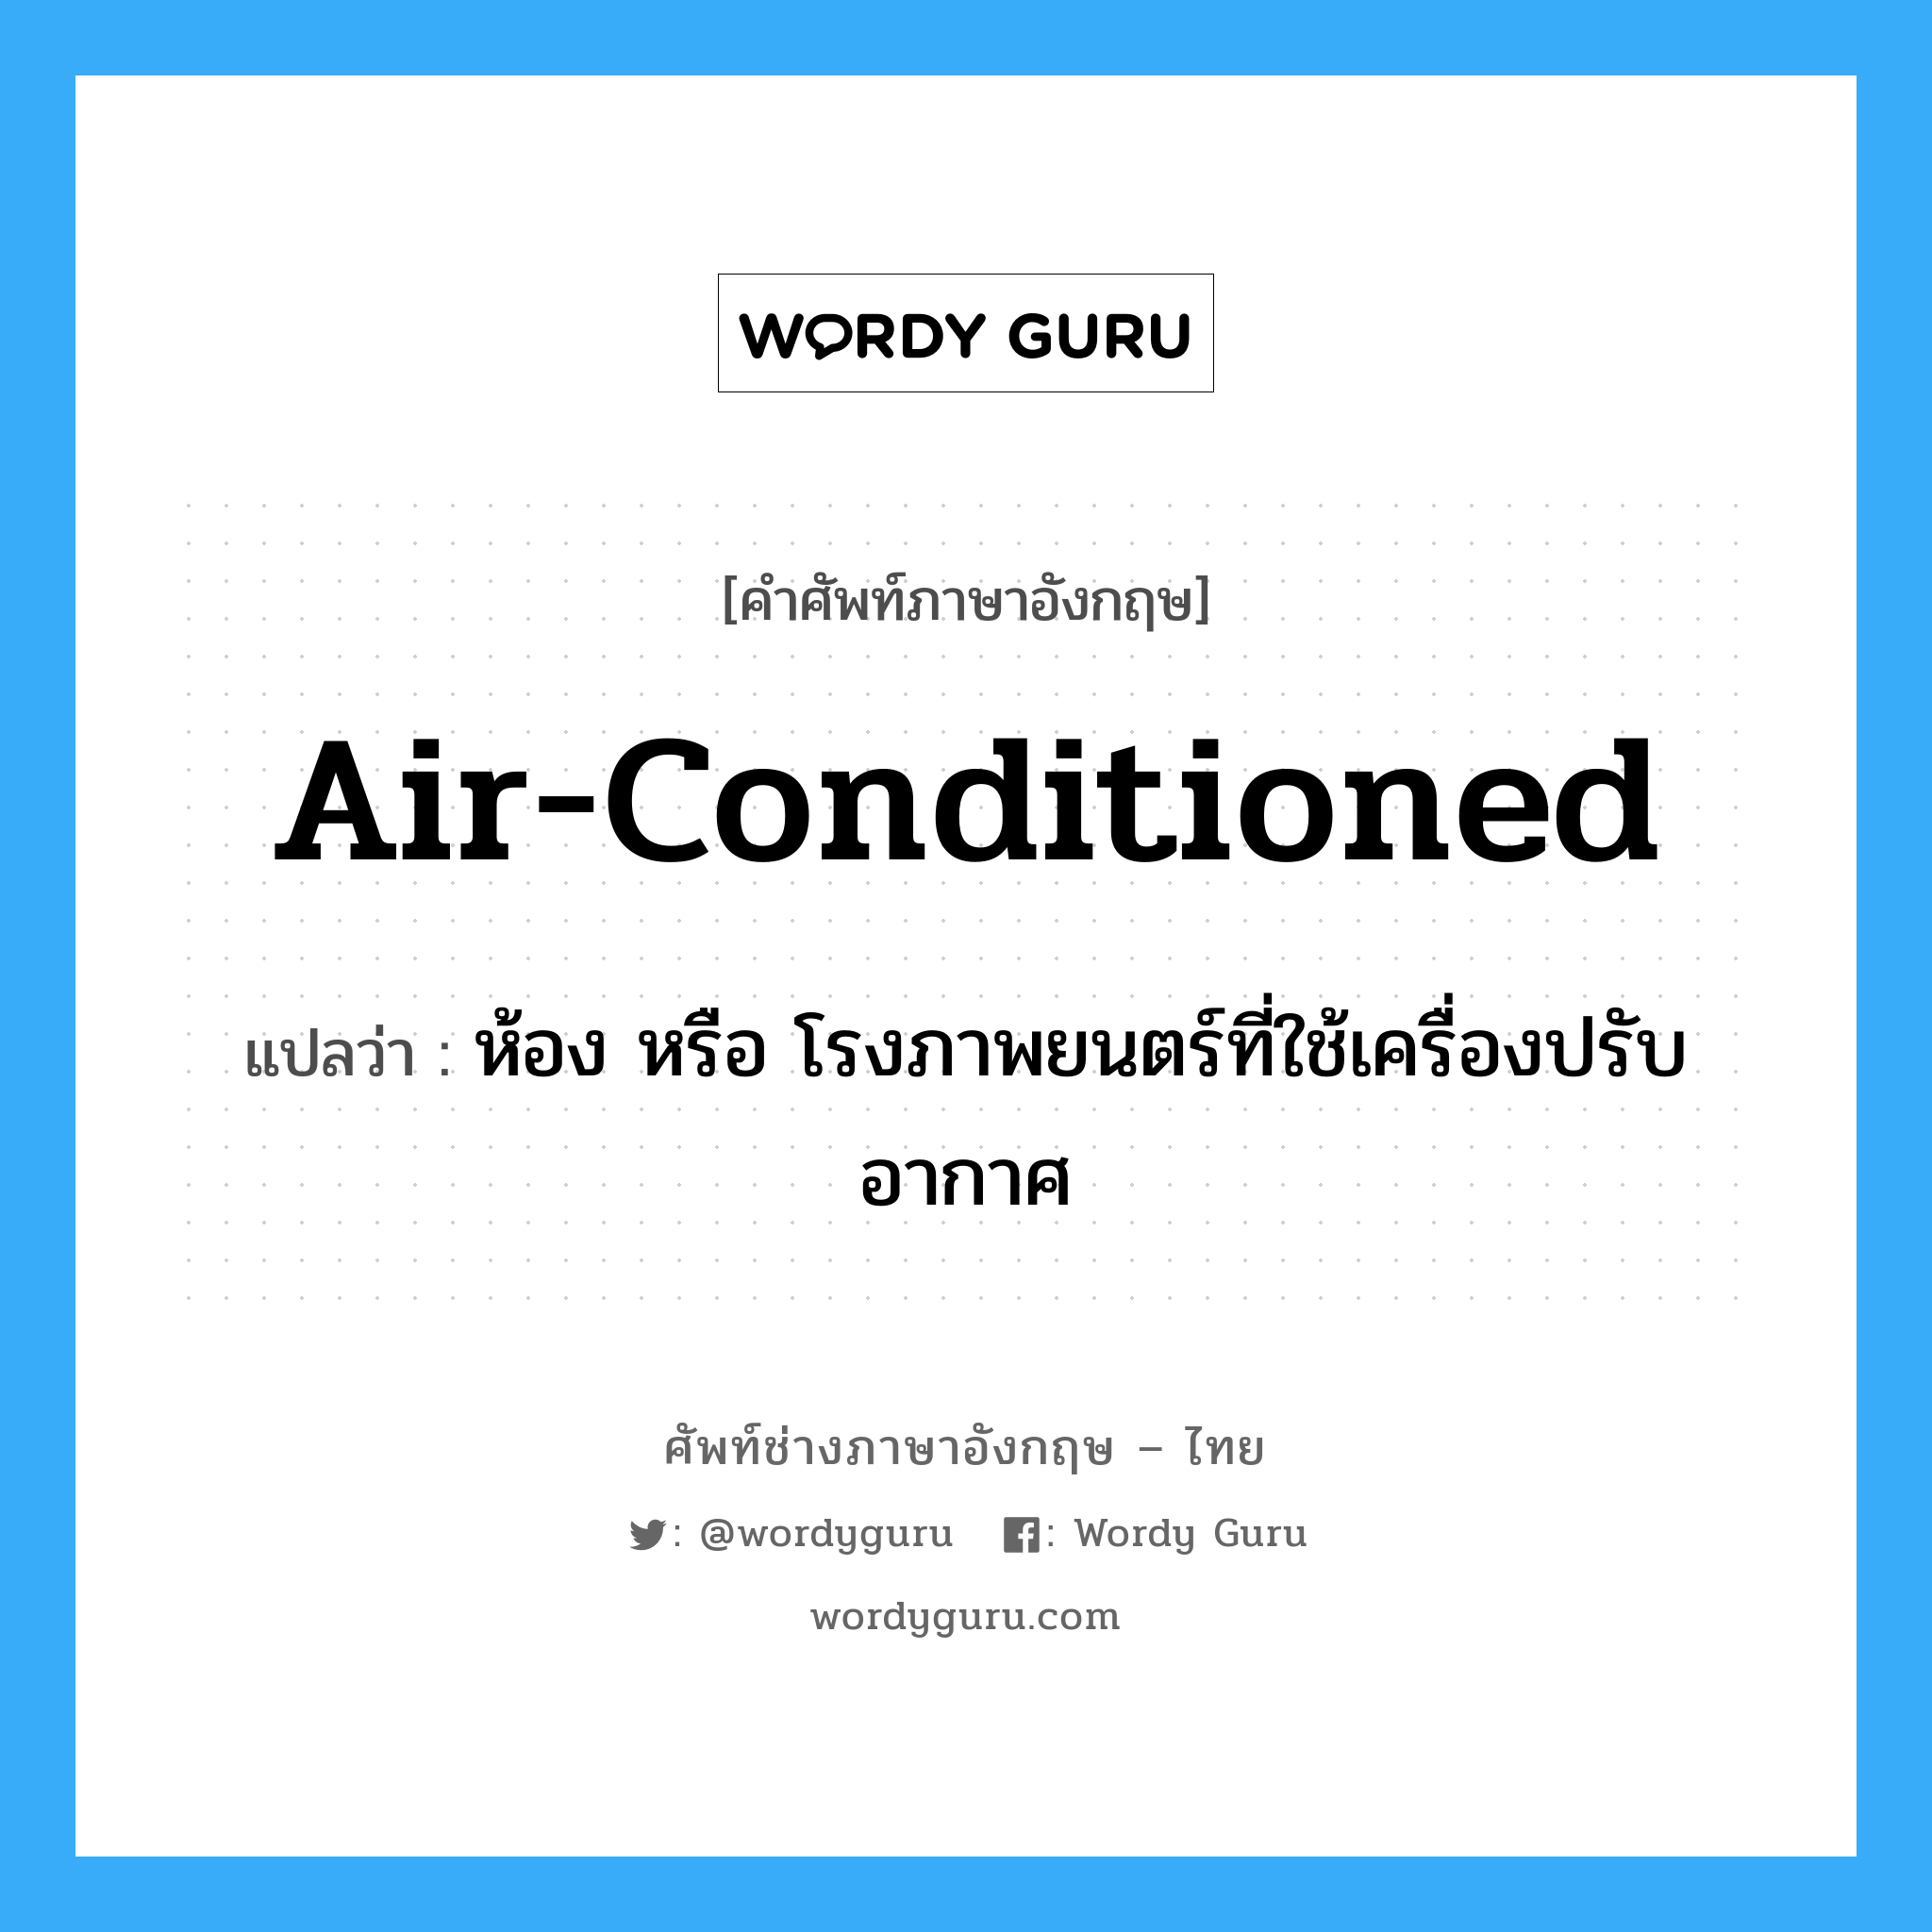 air-conditioned แปลว่า?, คำศัพท์ช่างภาษาอังกฤษ - ไทย air-conditioned คำศัพท์ภาษาอังกฤษ air-conditioned แปลว่า ห้อง หรือ โรงภาพยนตร์ที่ใช้เครื่องปรับอากาศ